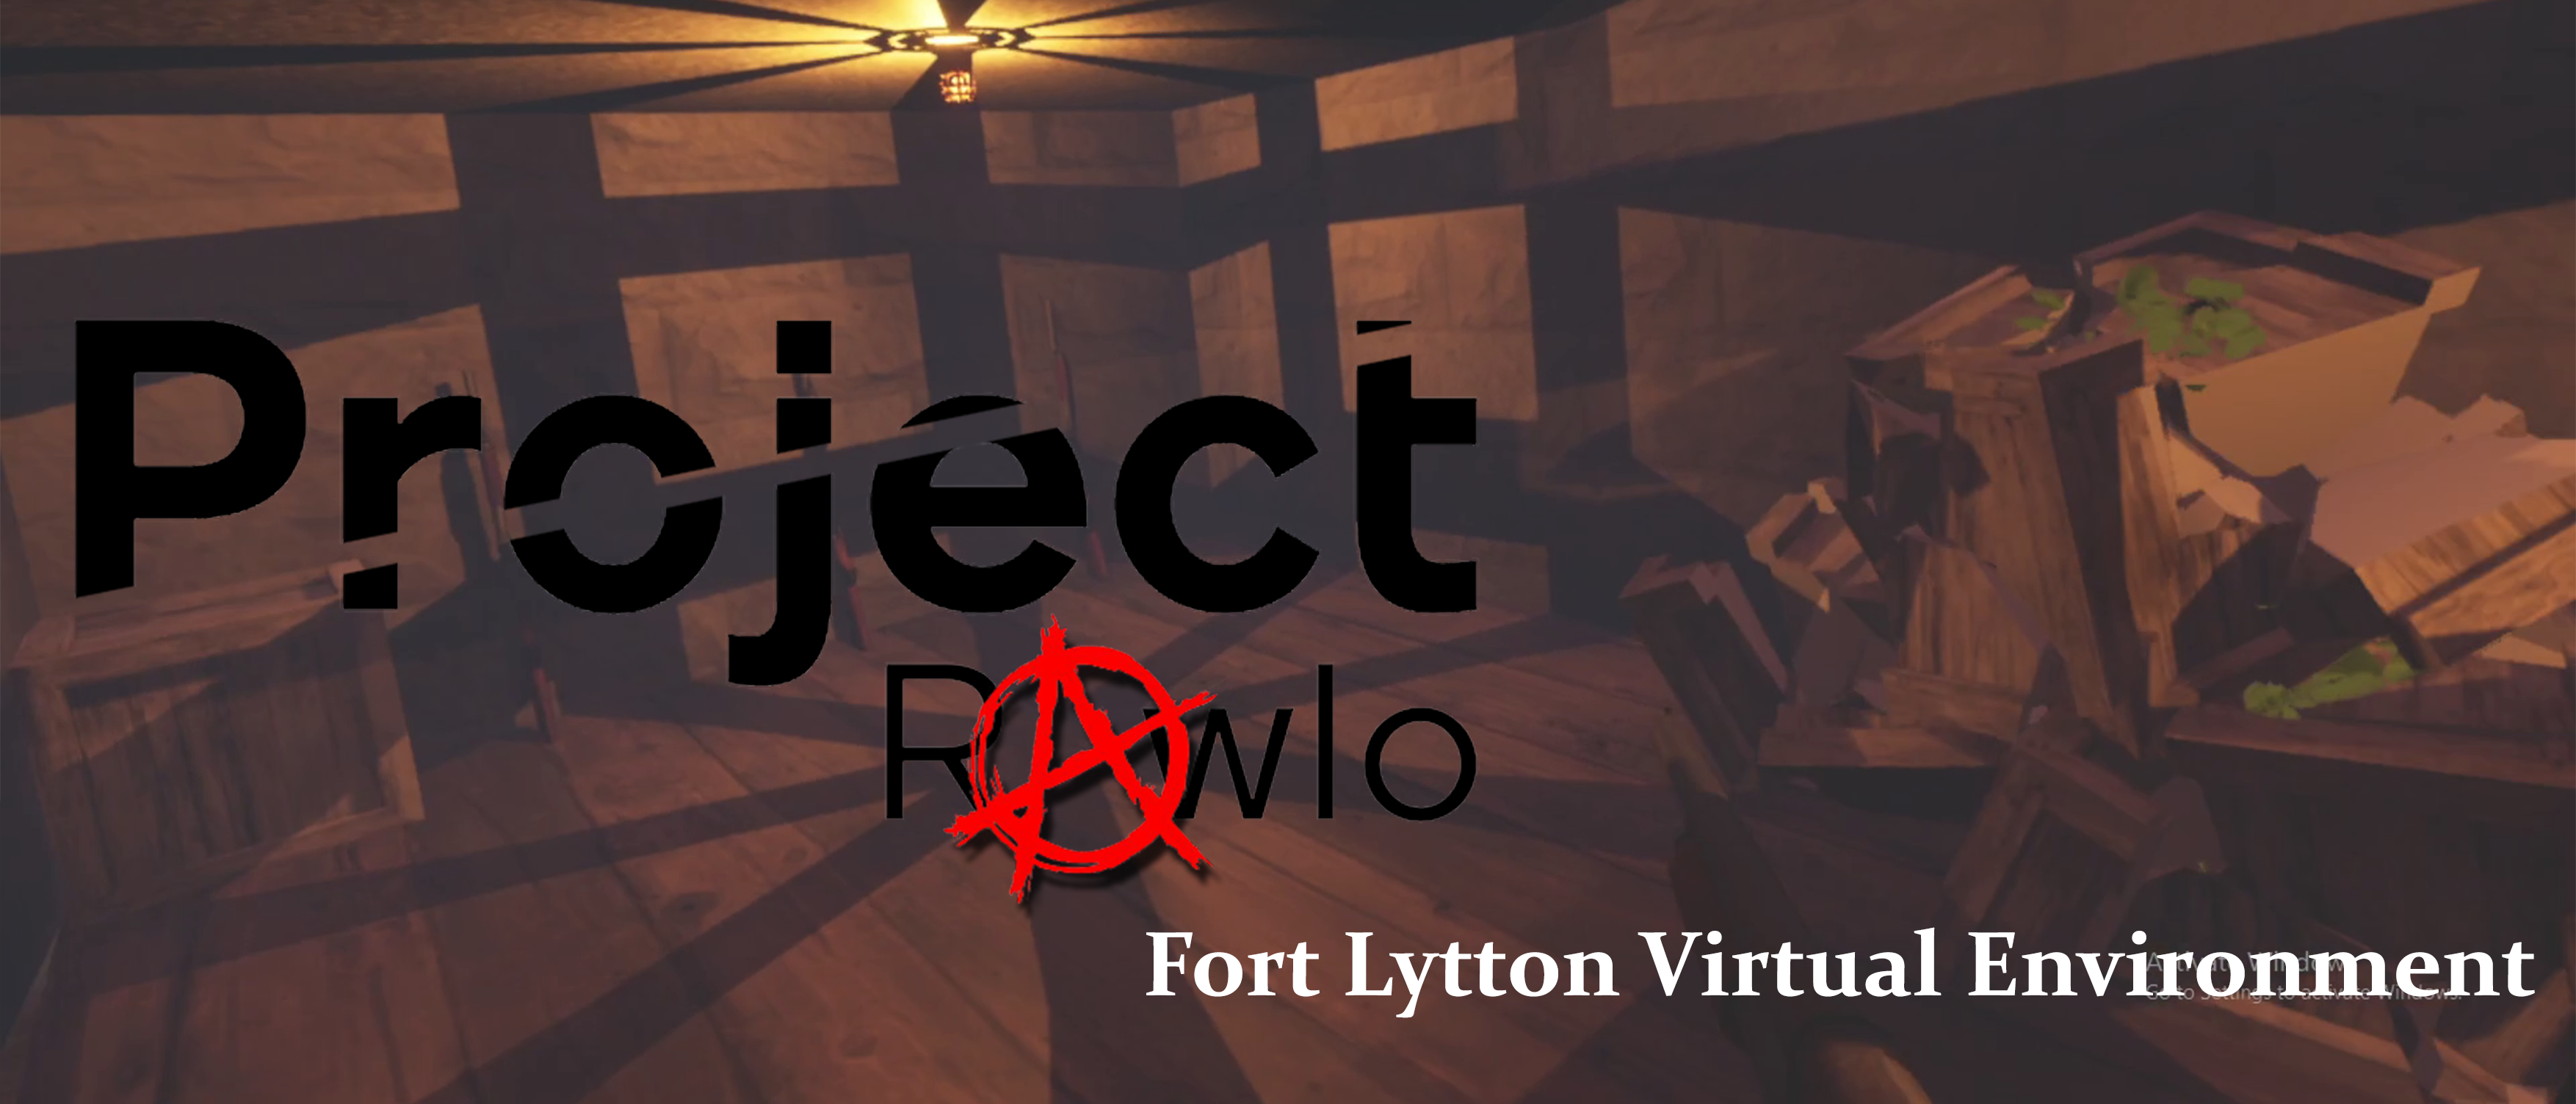 Fort Lytton Virtual Environment